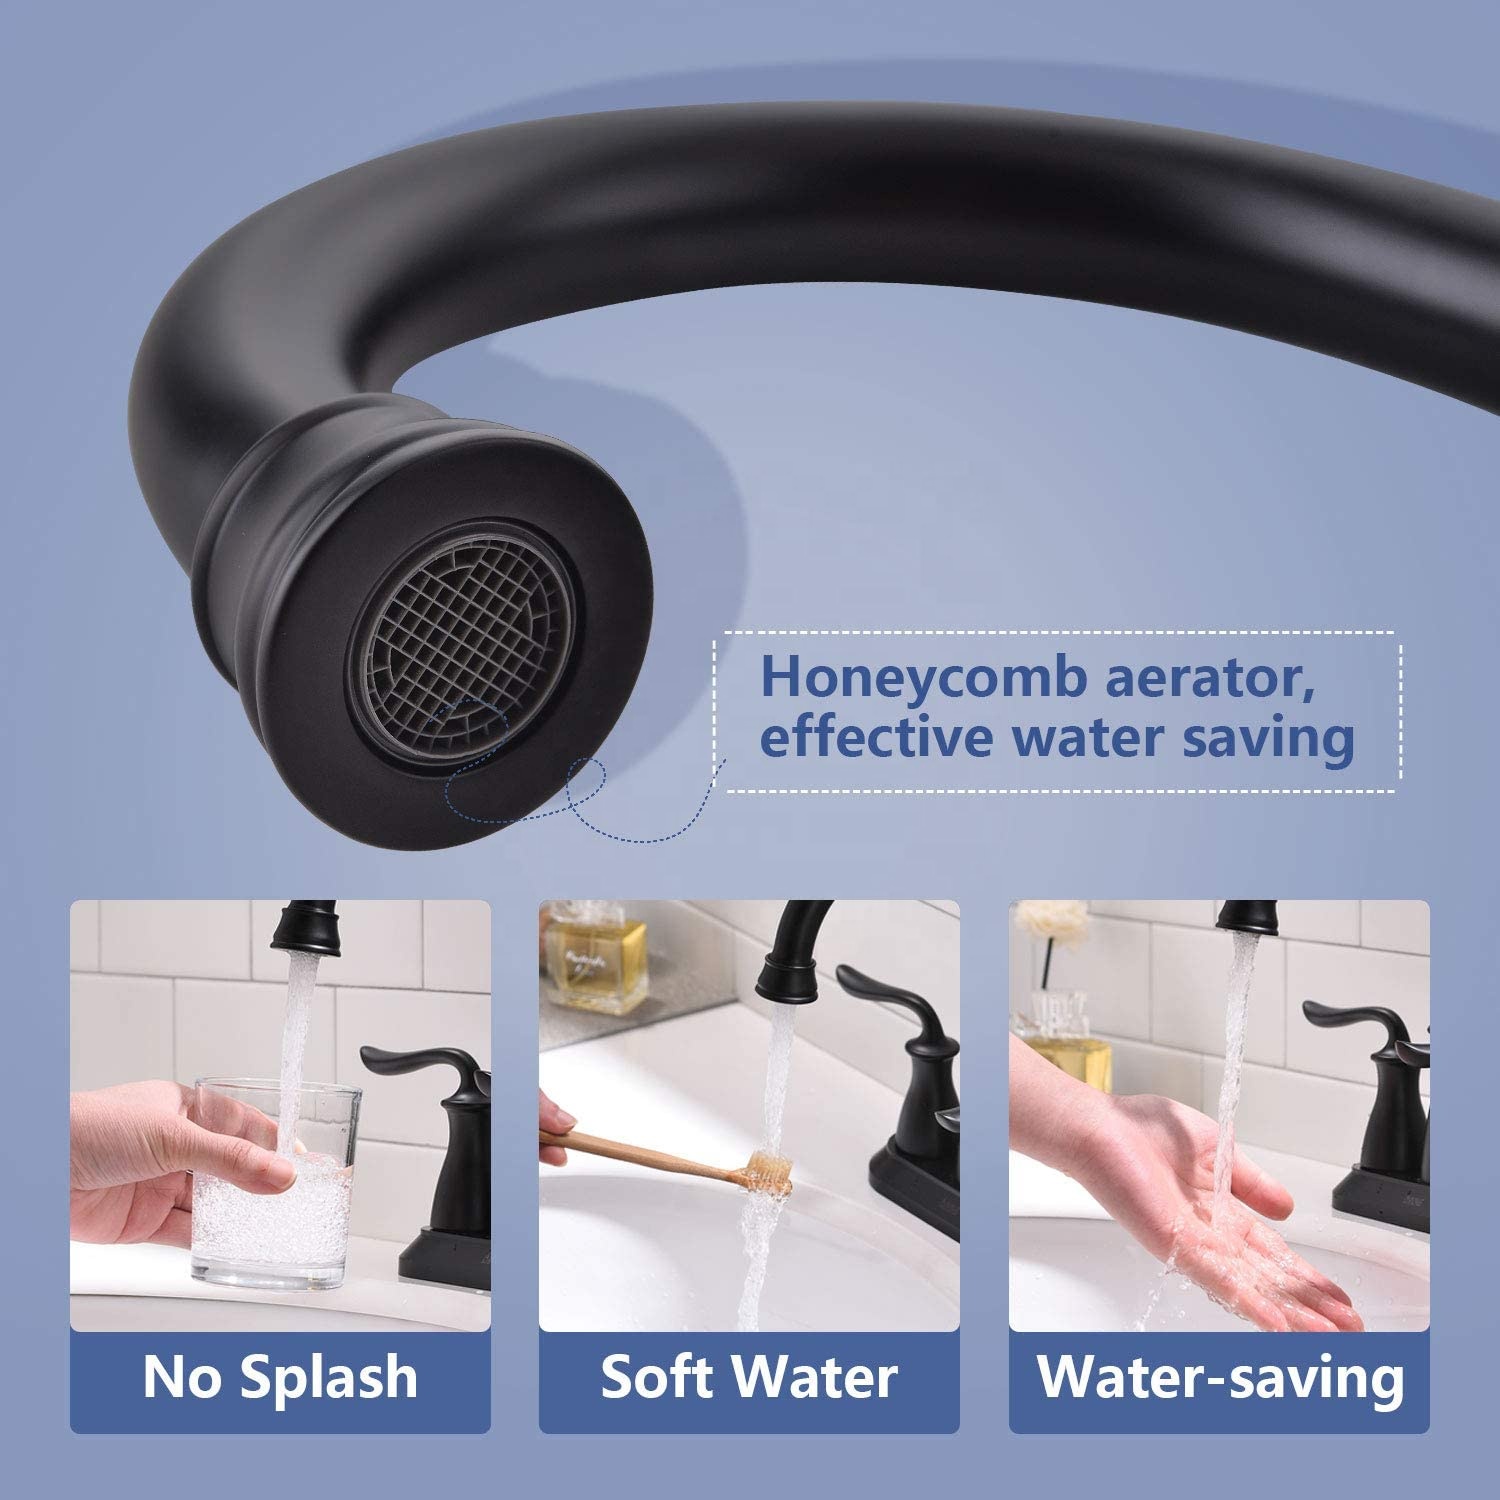 4" Centerset Basin Faucet Black Deck Mounted Basin Faucet Water Tap For Bathroom